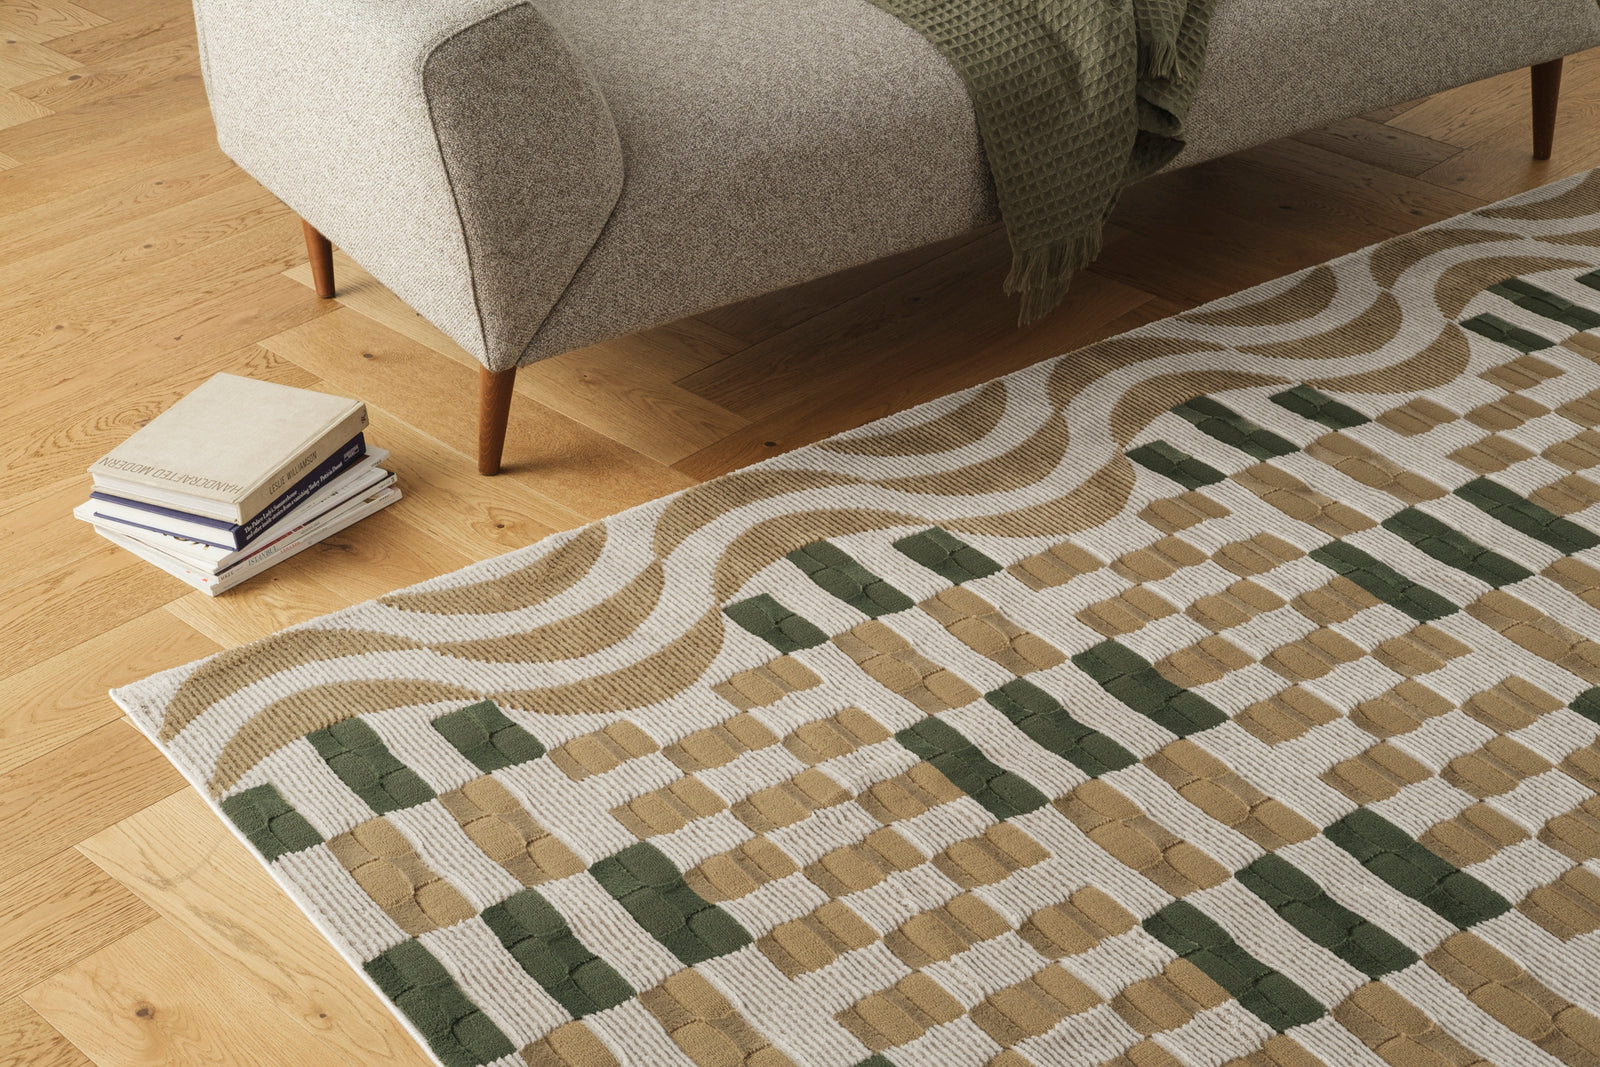 Louis vuitton golden new fashion area rug carpet living room rug